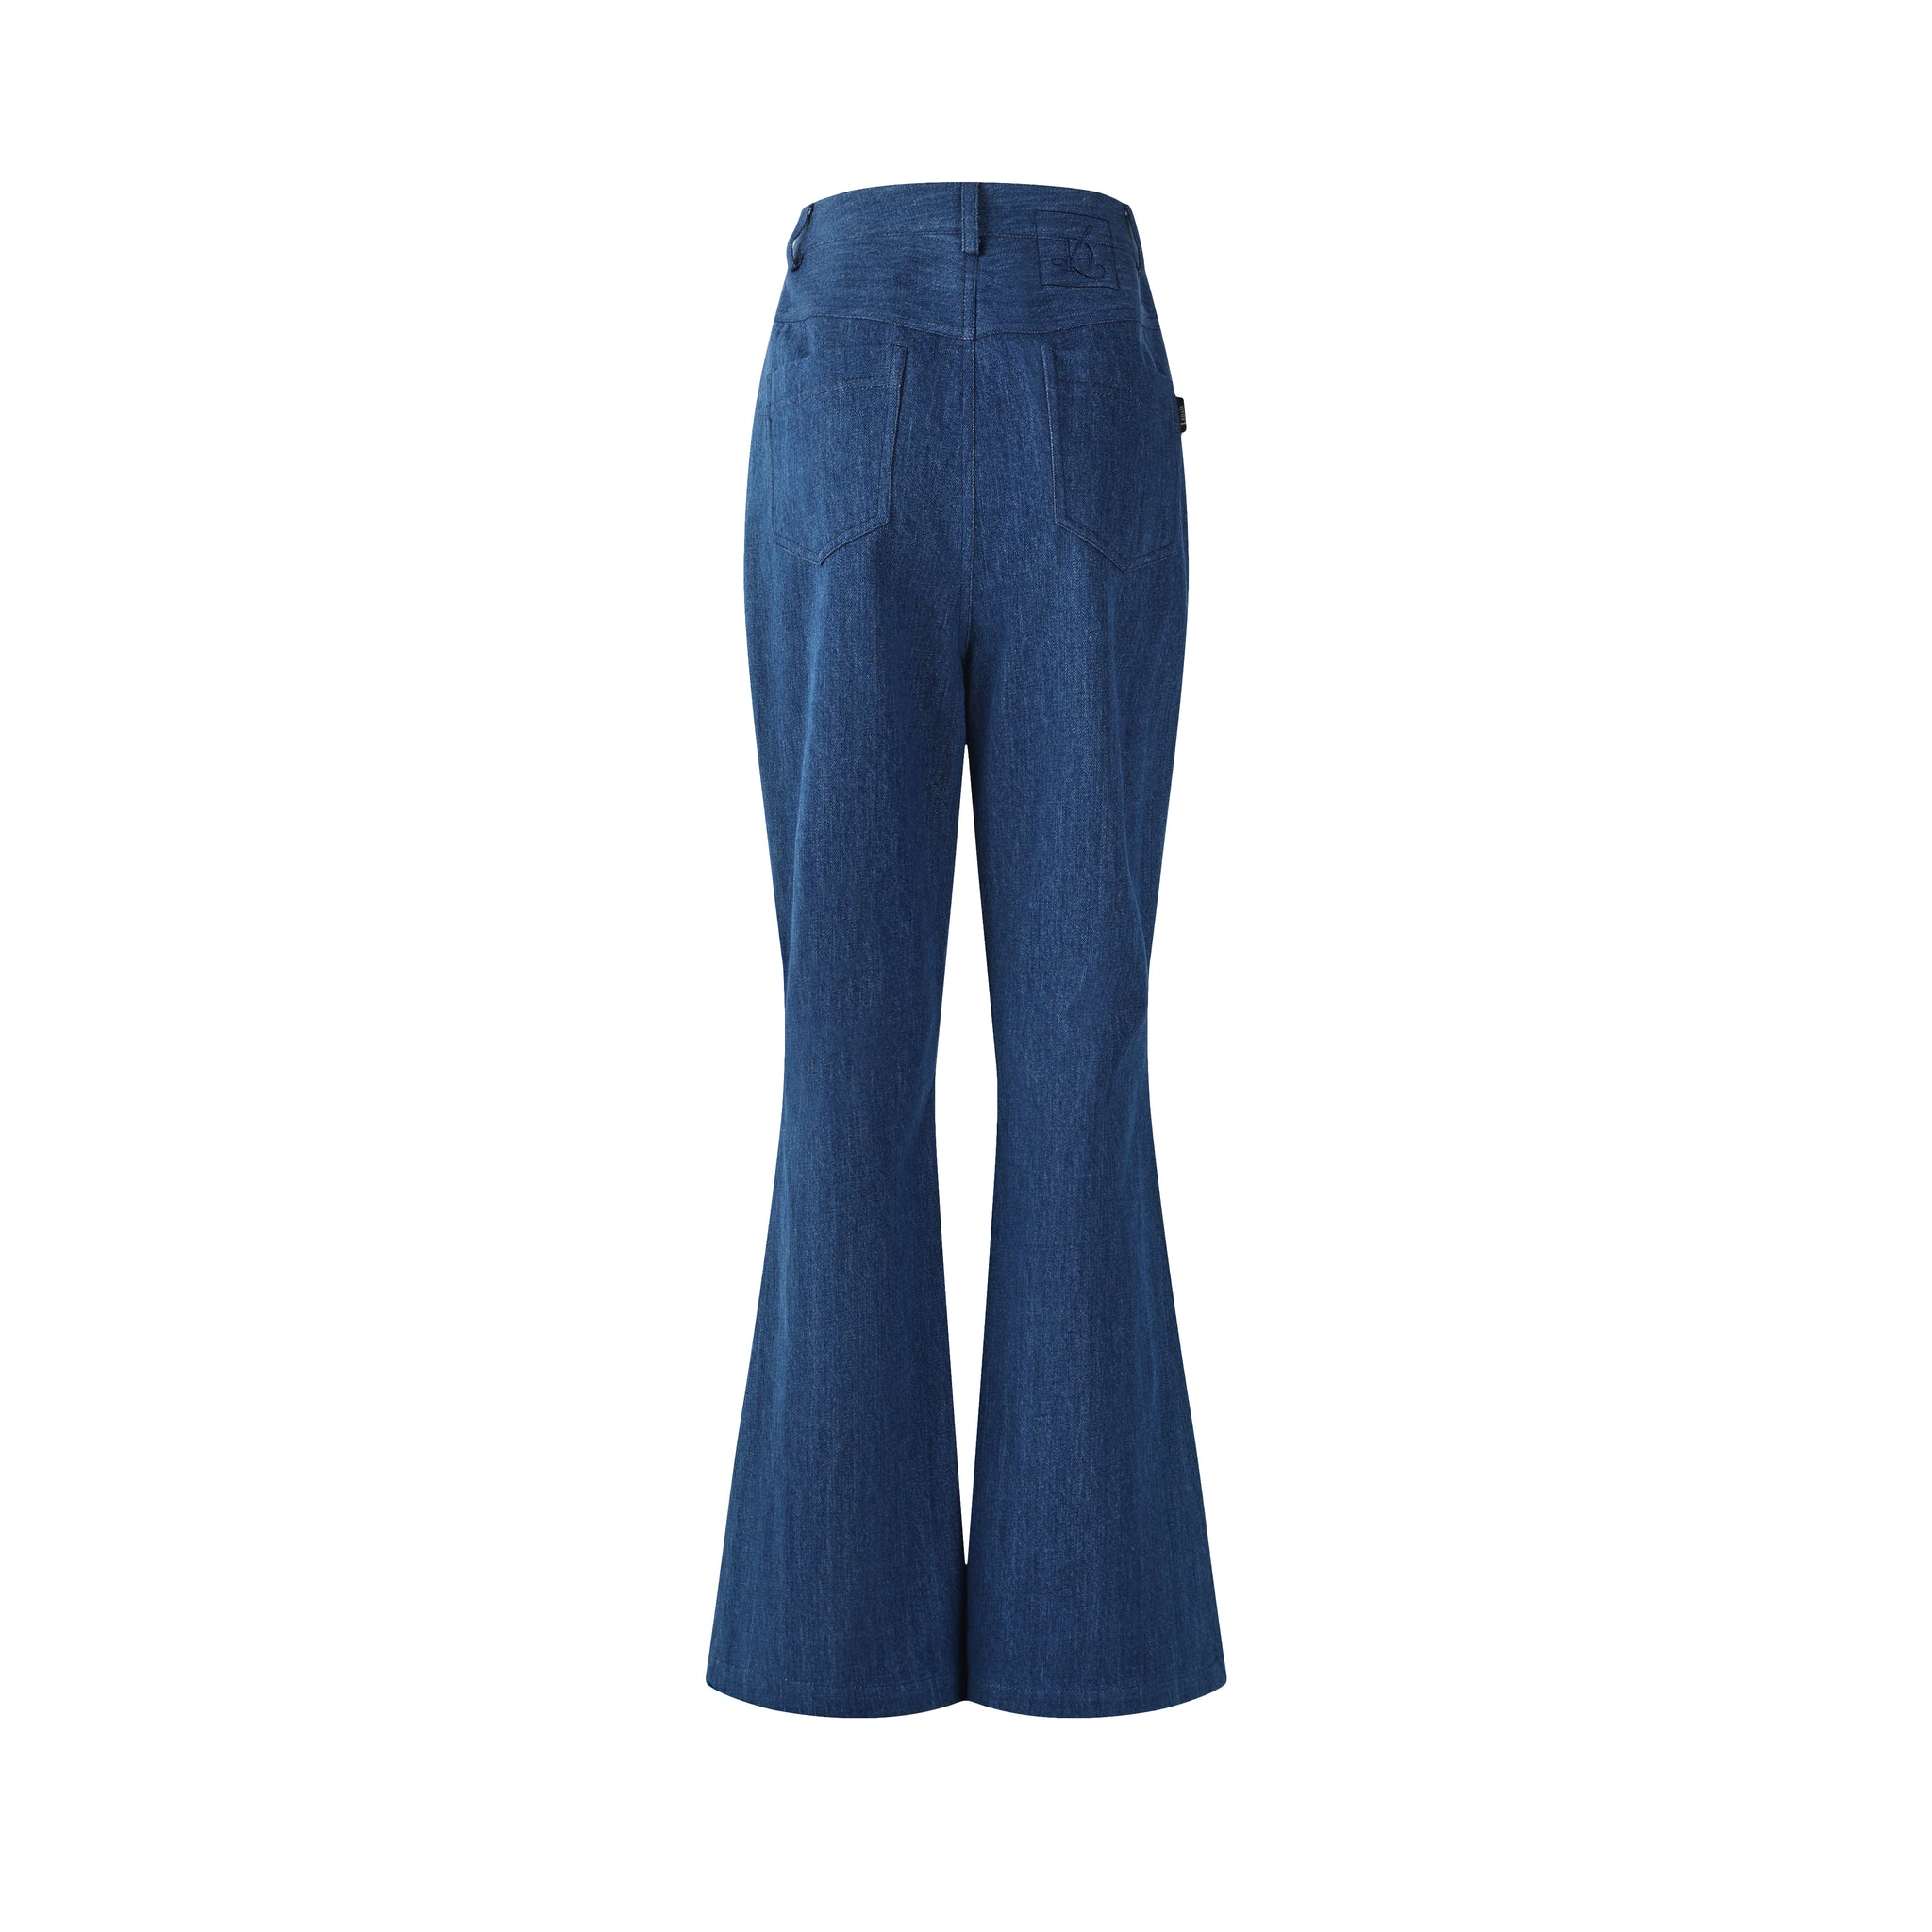 Jenner Denim High Waist Flared Jeans